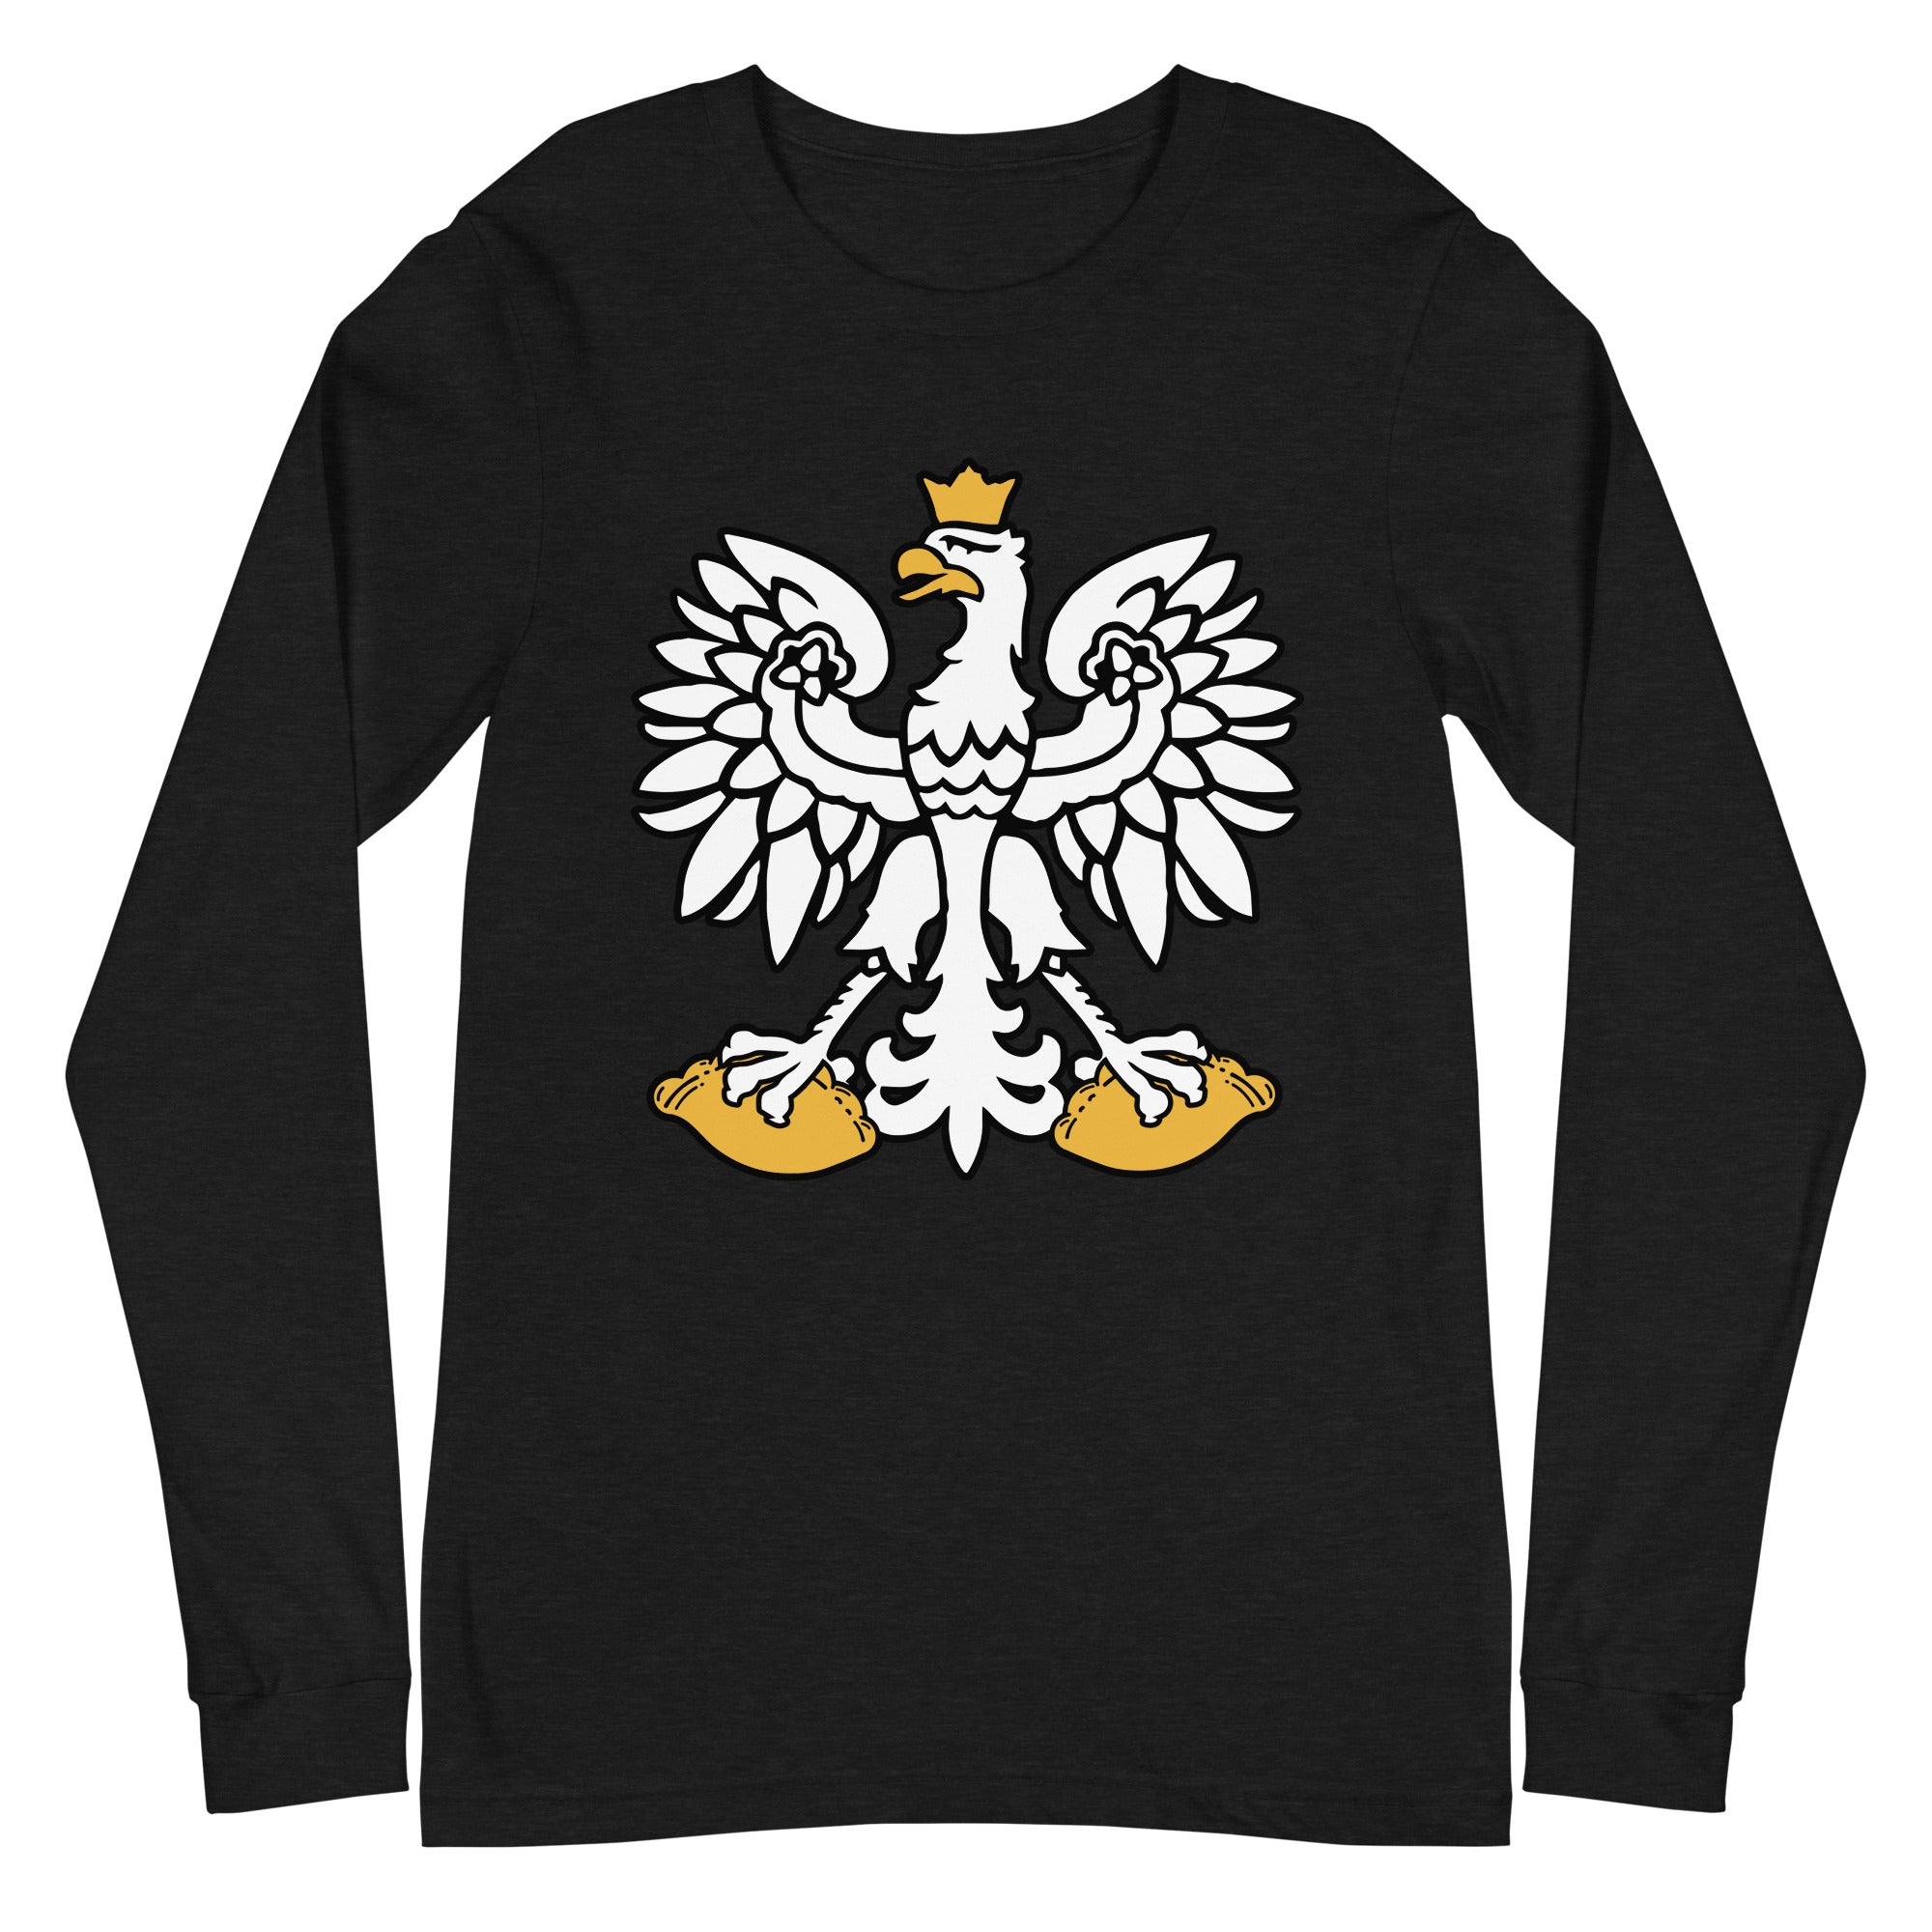 Polska Polish Eagle Emblem Unisex Crew Neck T-Shirt, White